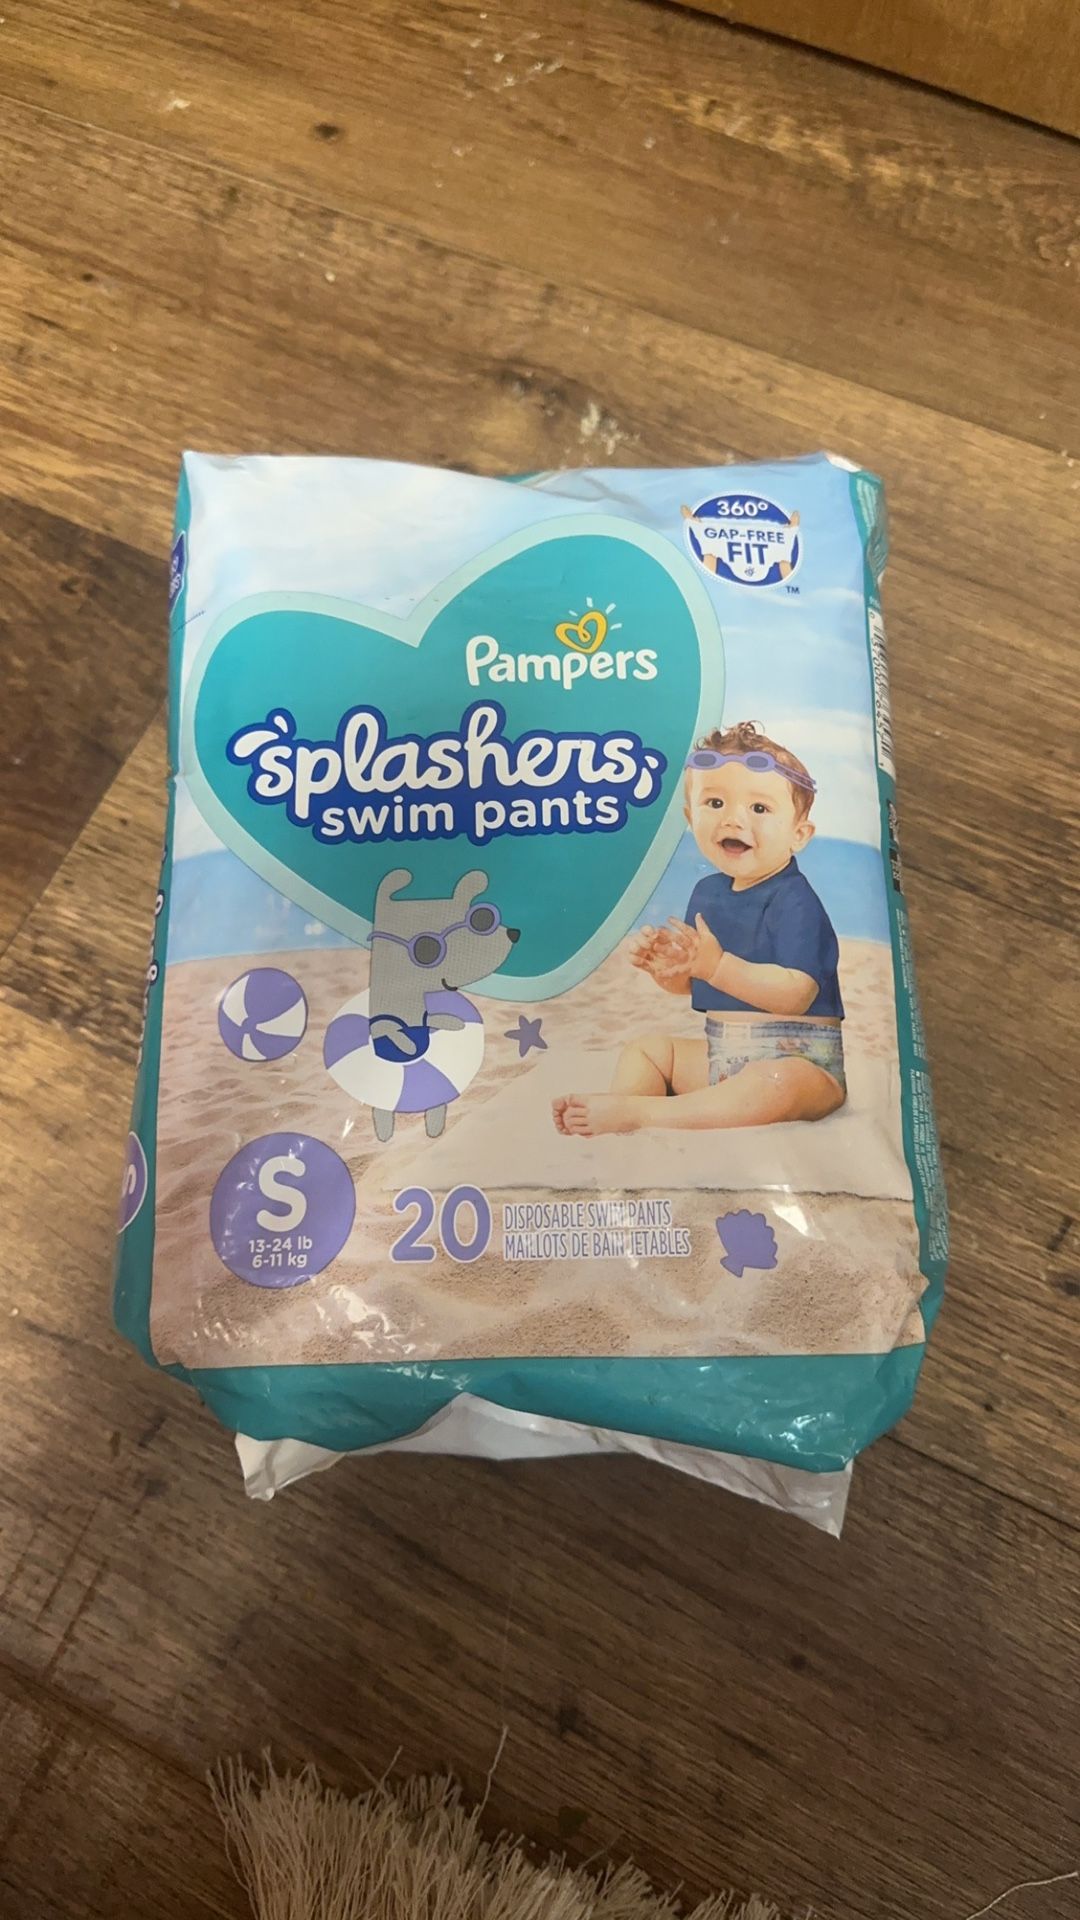 Pampers Splashers Disposable Swim Pants 